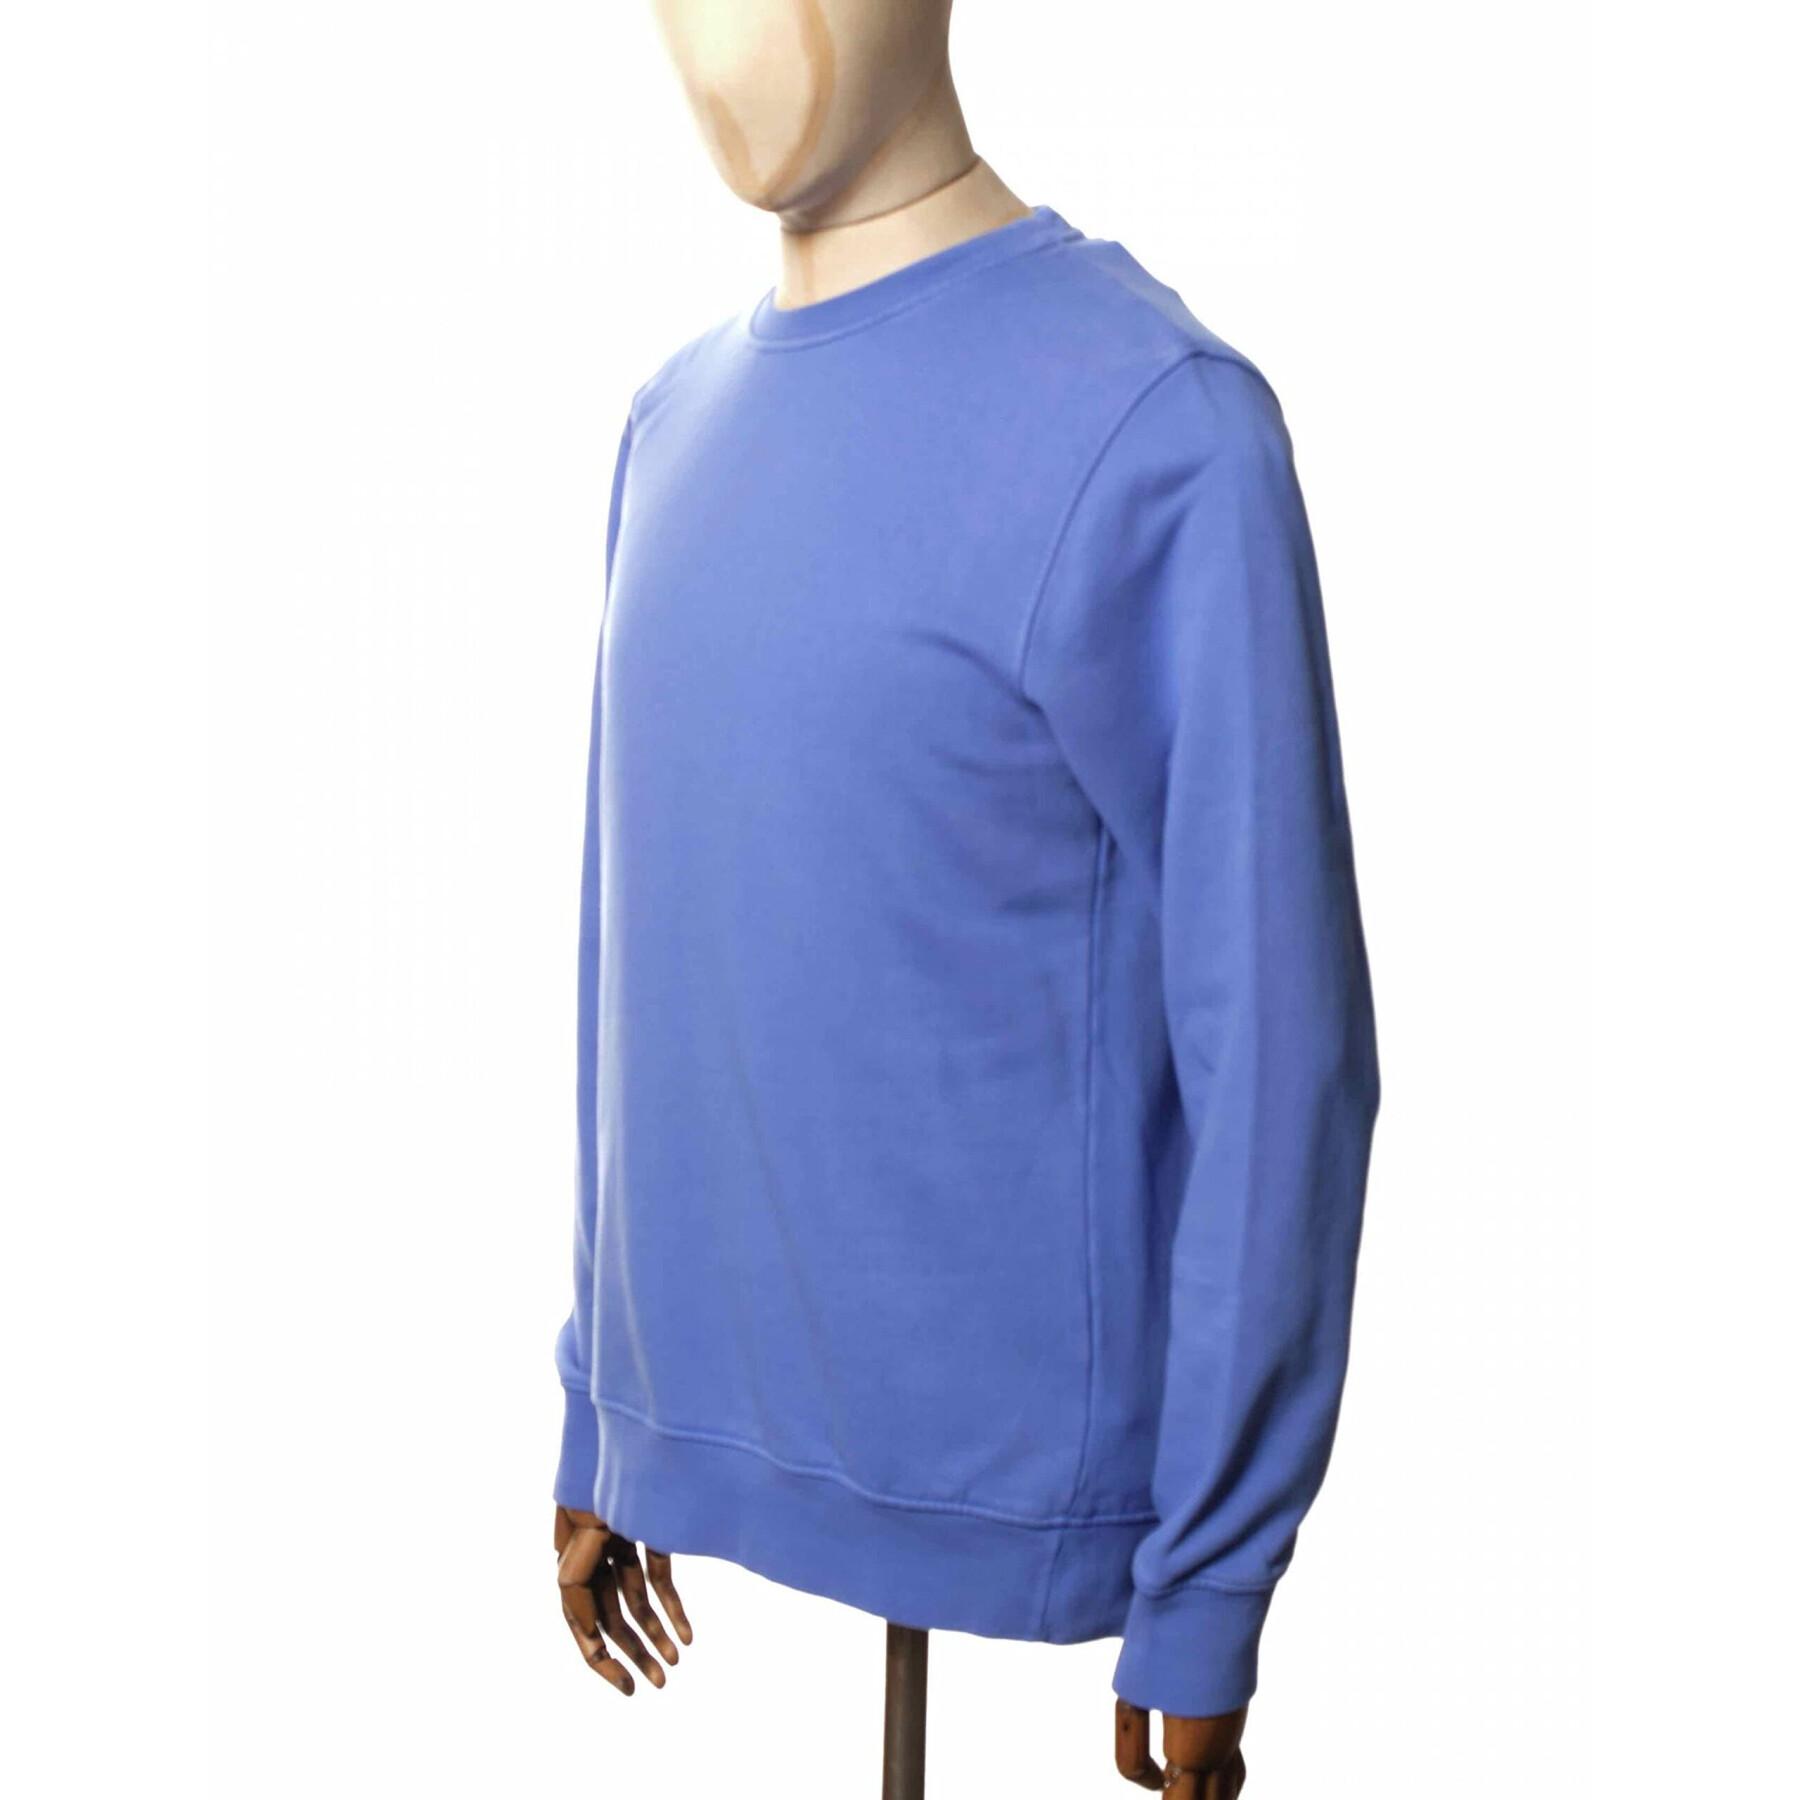 Sweatshirt ronde hals Colorful Standard Classic Organic sky blue